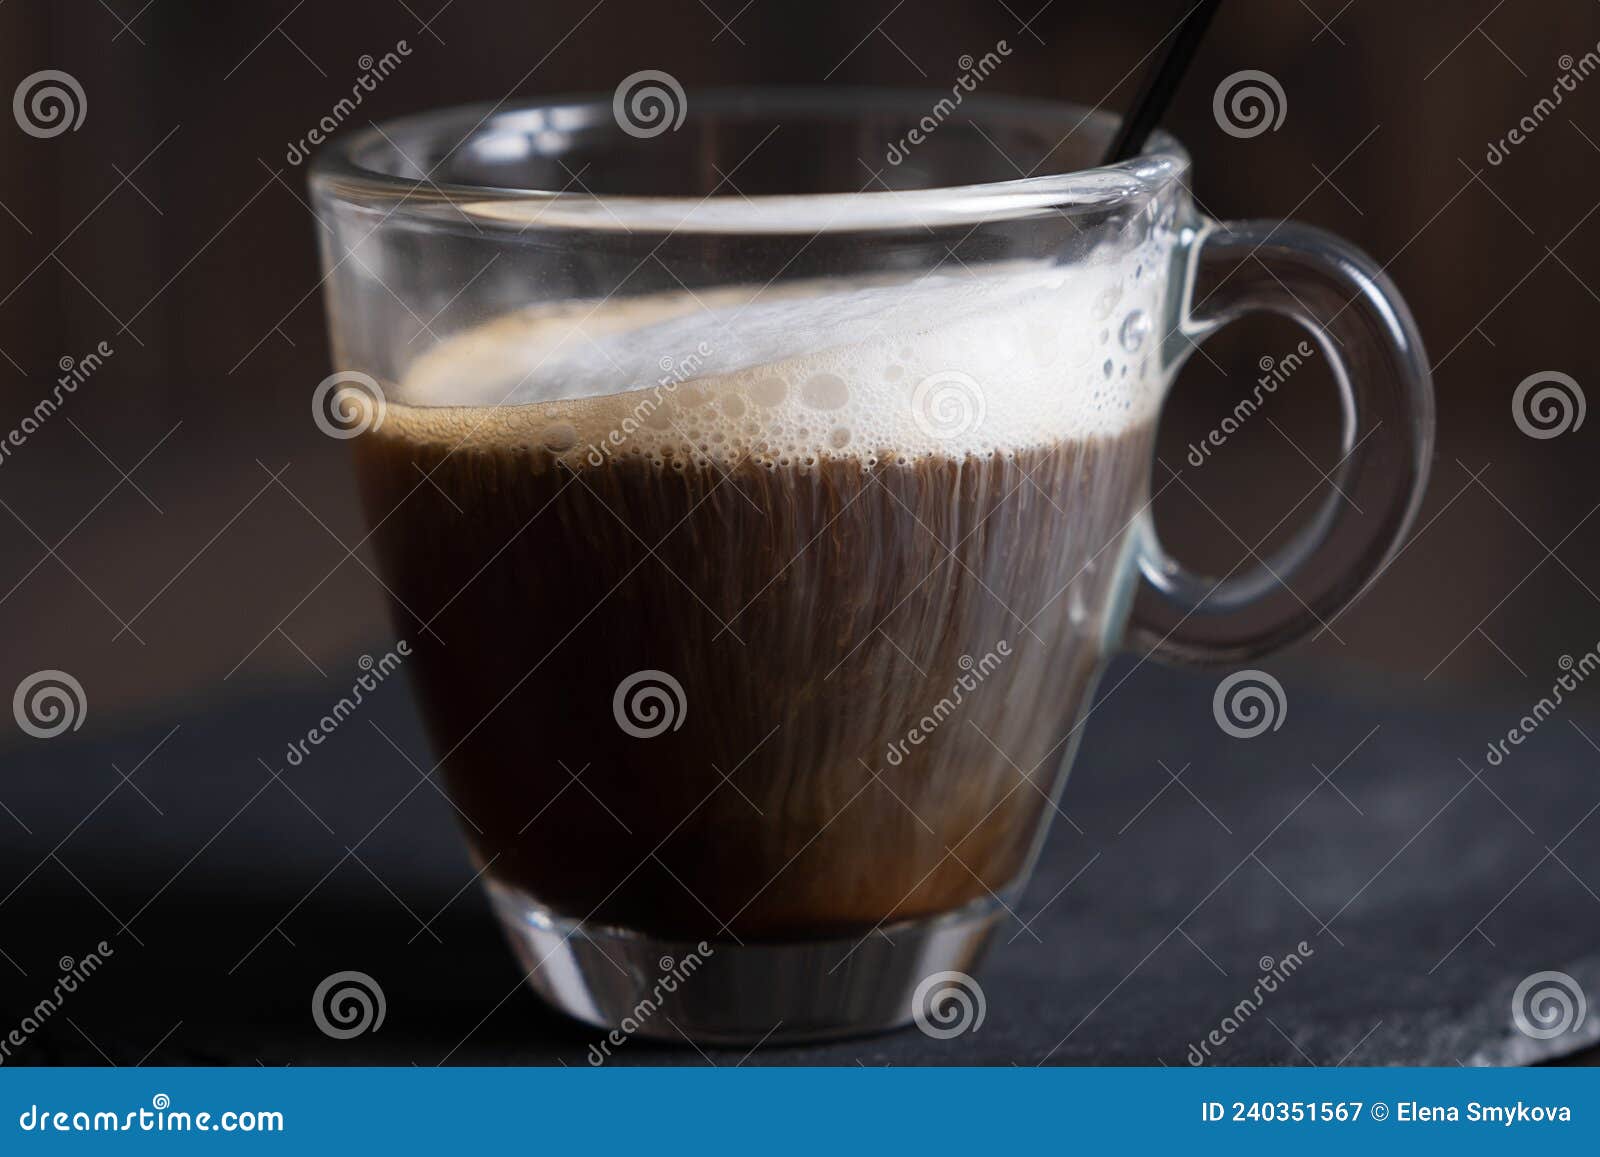 cafe espresso macchiato layered coffee in a see through glass coffee cup